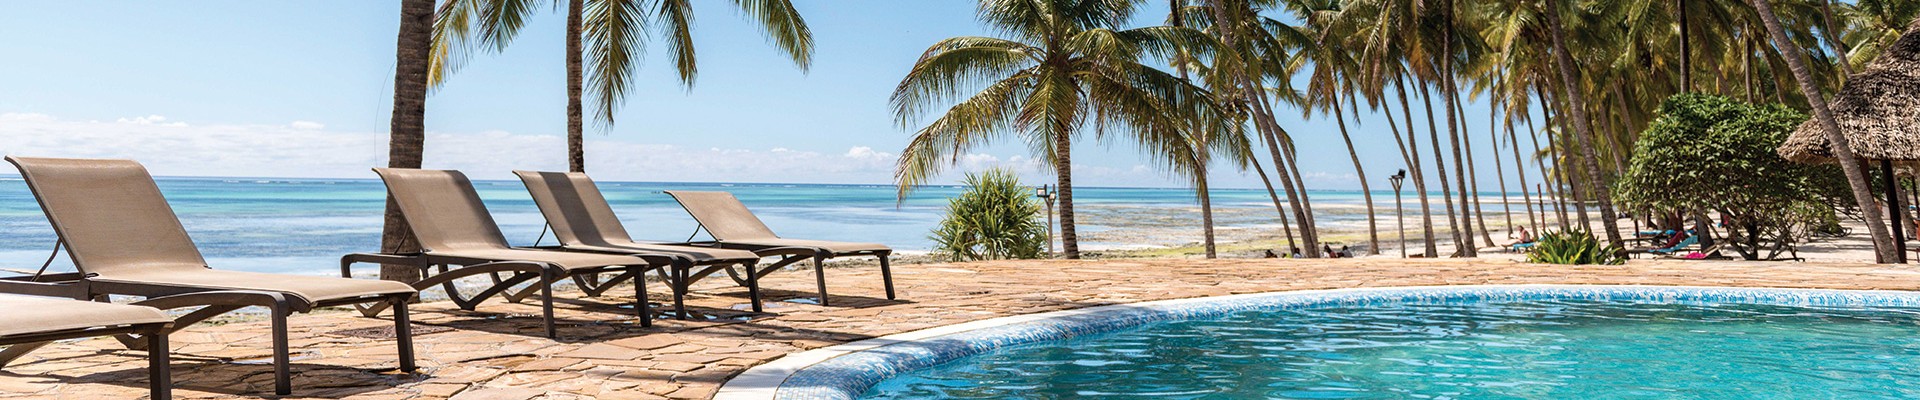 4* Karafuu Beach Resort & Spa - Zanzibar Package (5 Nights)